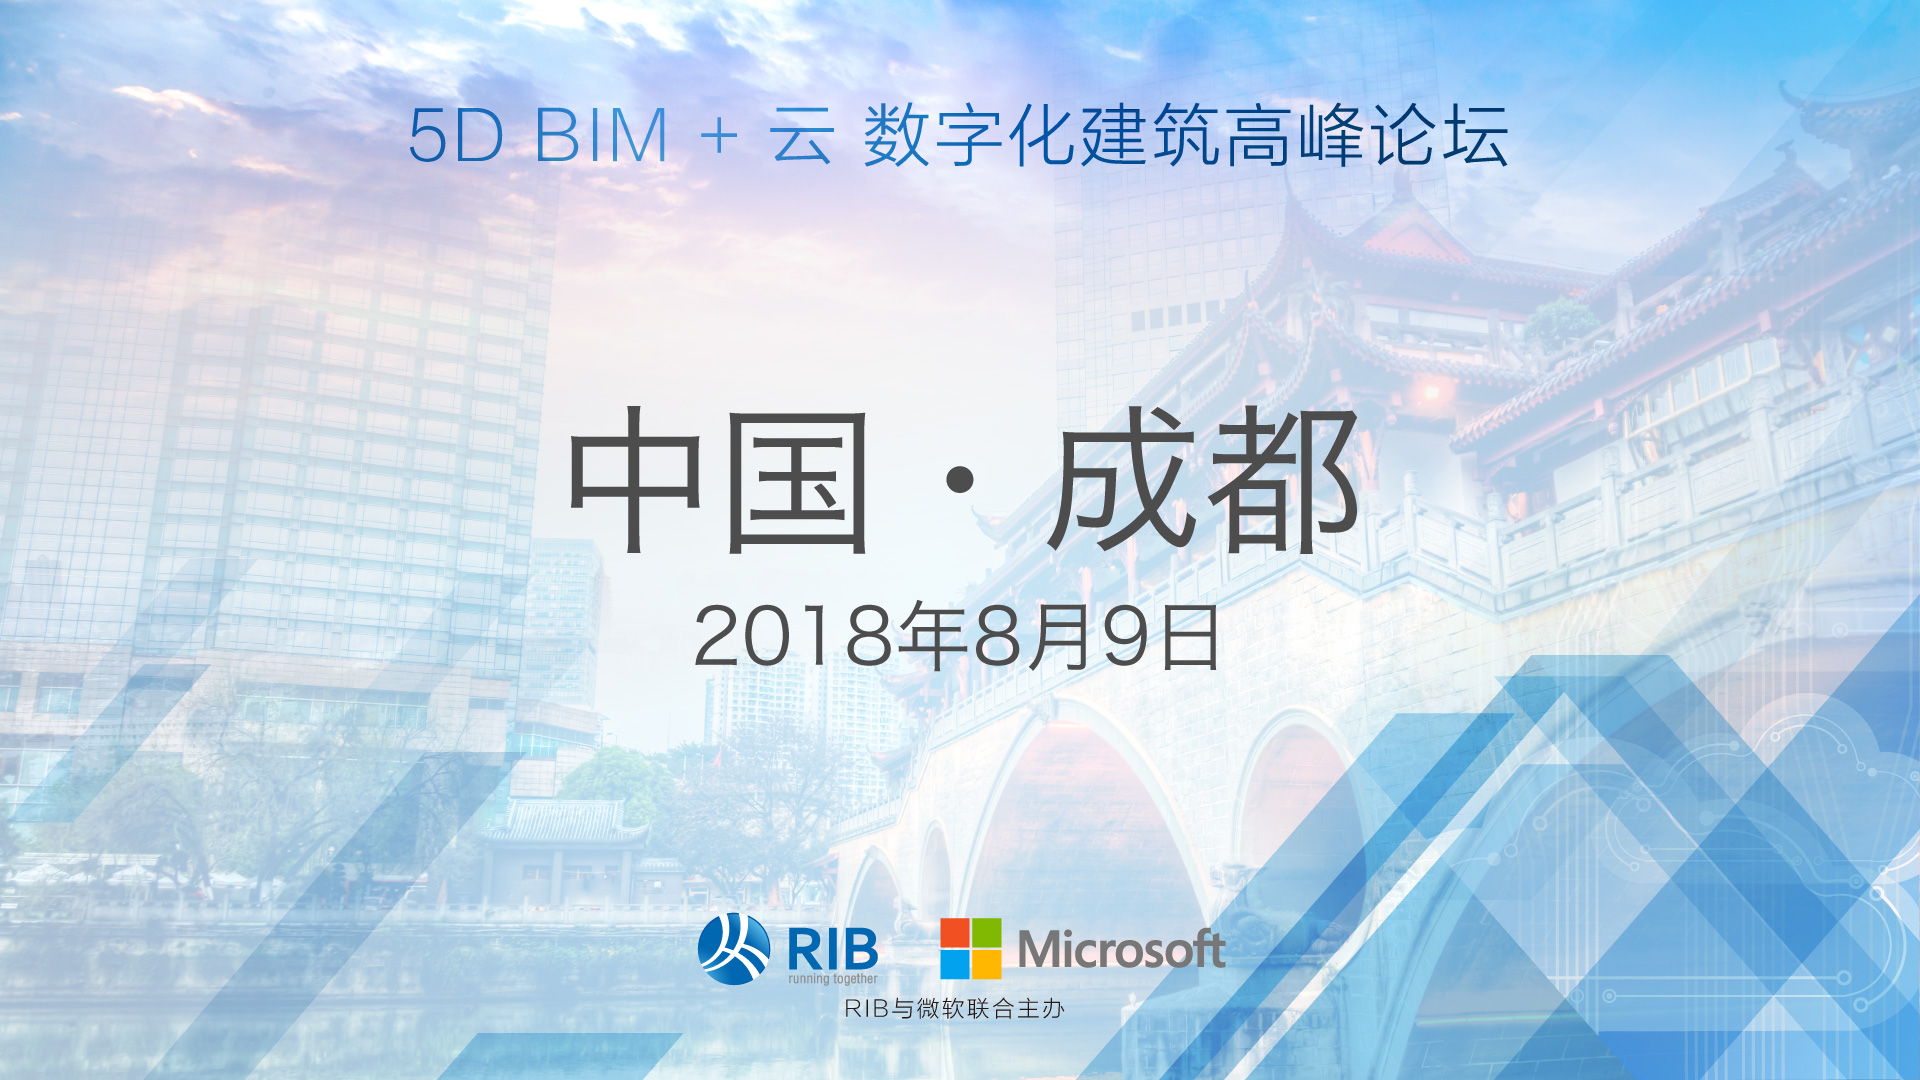 5D BIM+云建筑数字化高峰论坛2018【成都站】